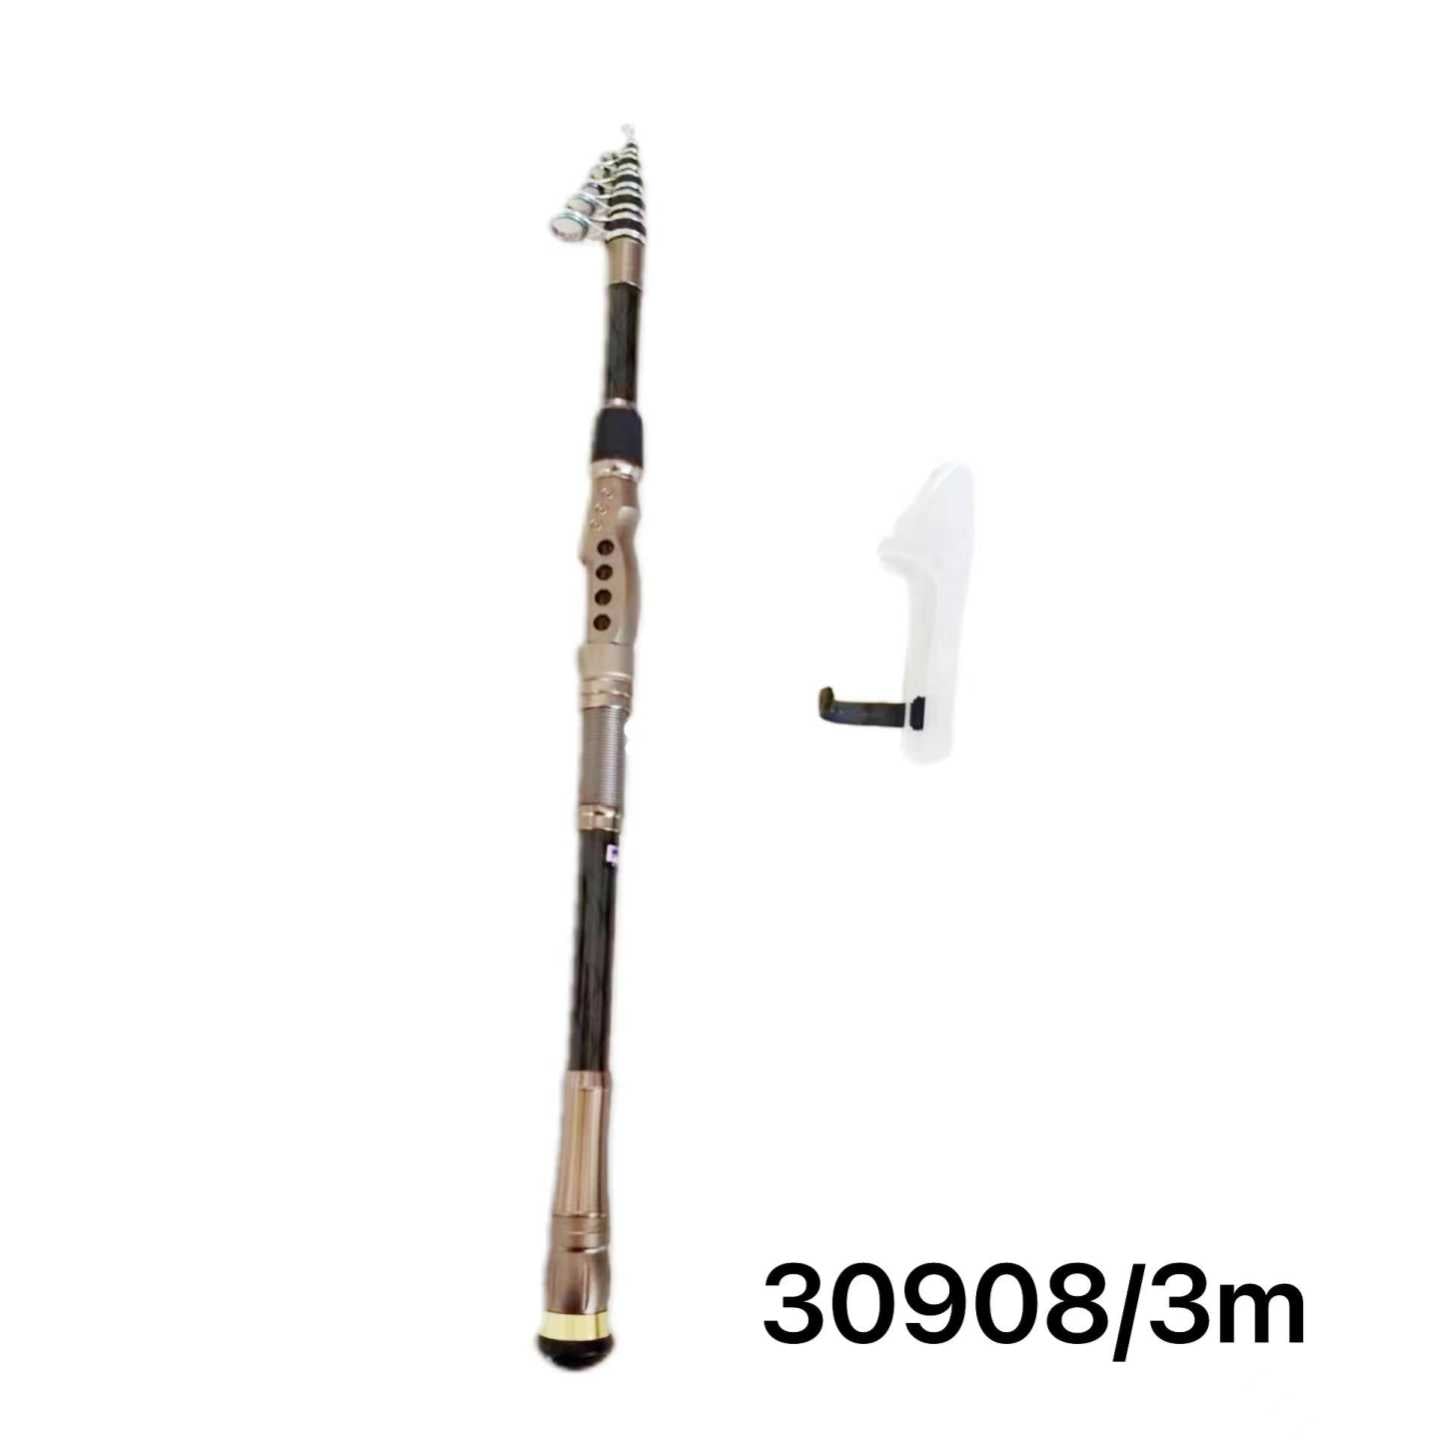 Fishing rod - Telescopic - 3.0m - 30908